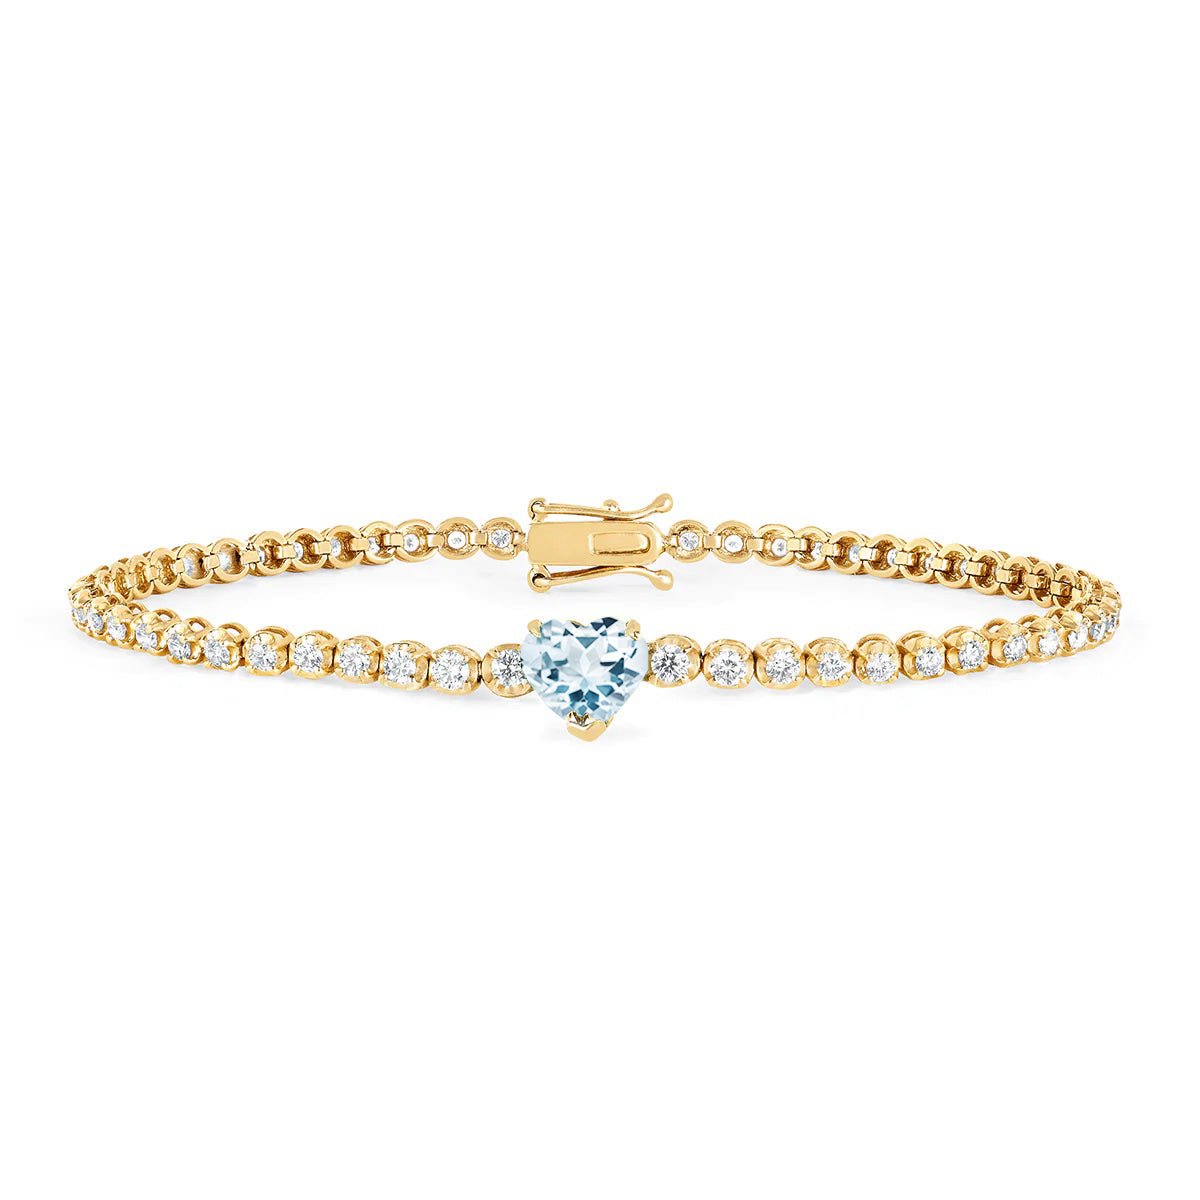 Garnet, Citrine, Aquamarine and Amethyst 18k Yellow Gold Bracelet –  Broer-Freeman Jewelers